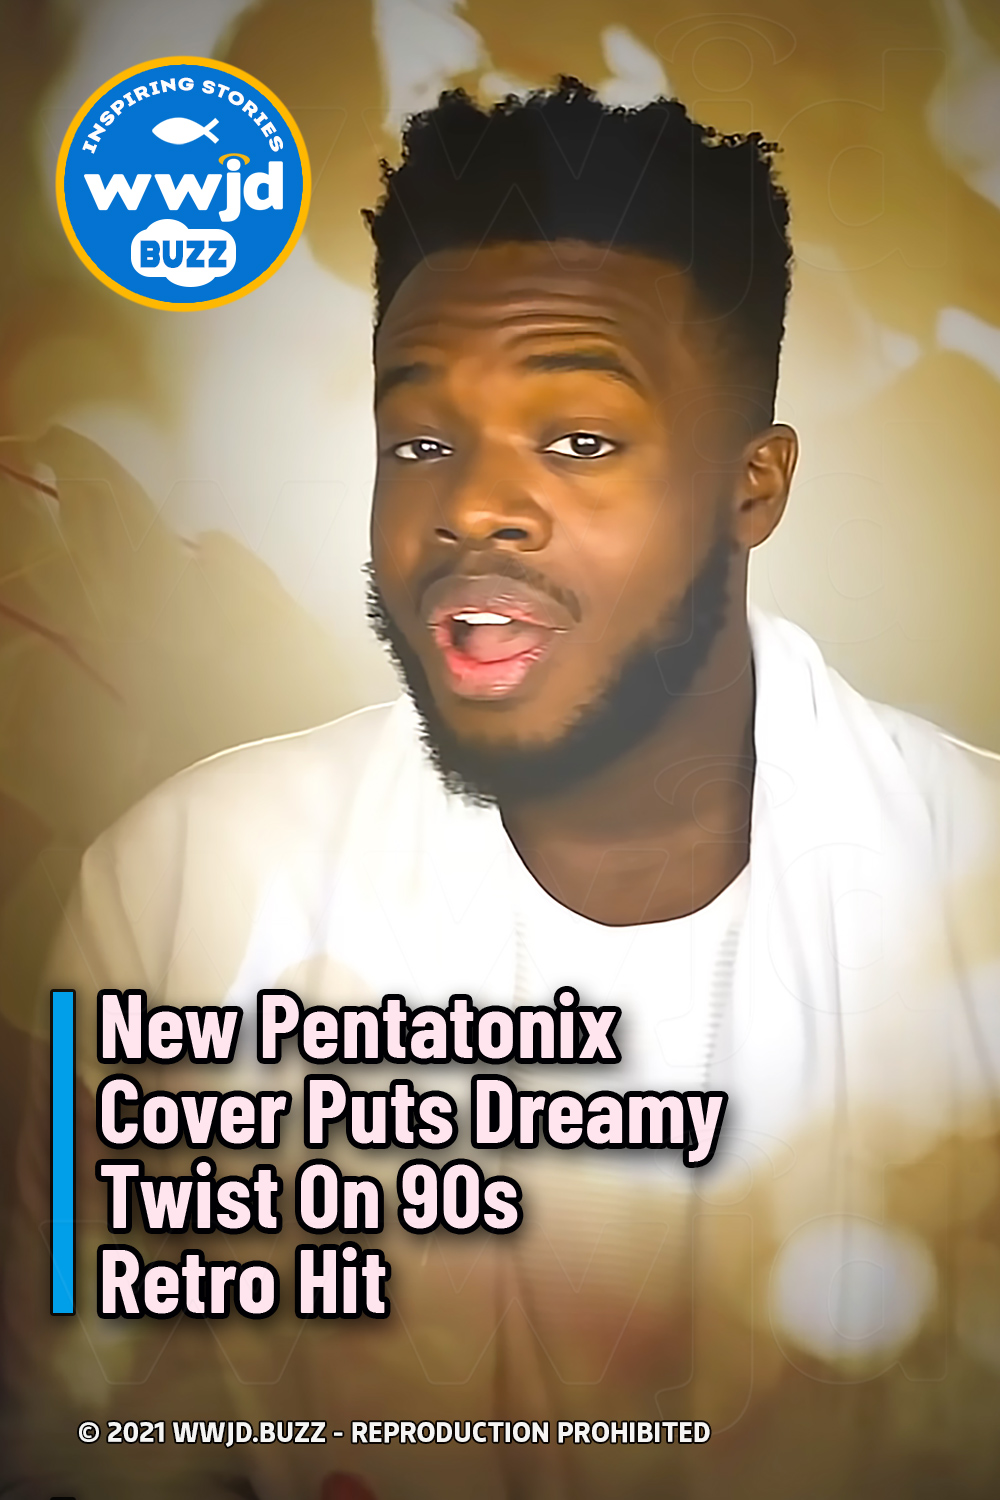 New Pentatonix Cover Puts Dreamy Twist On 90s Retro Hit